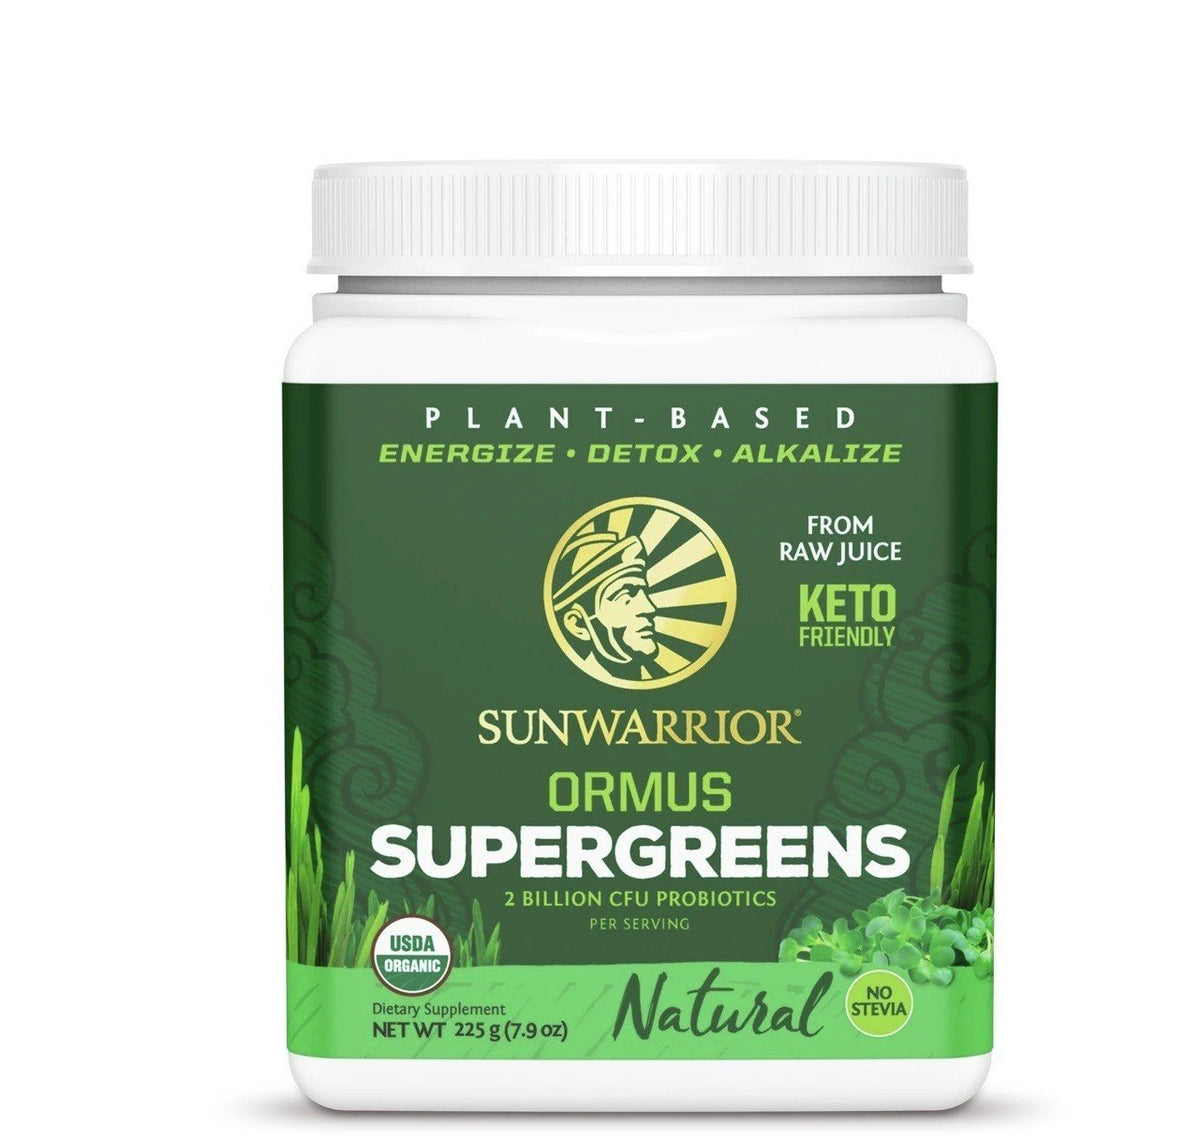 Sunwarrior Ormus Super Greens Natural 225 g (7.9 oz) Powder